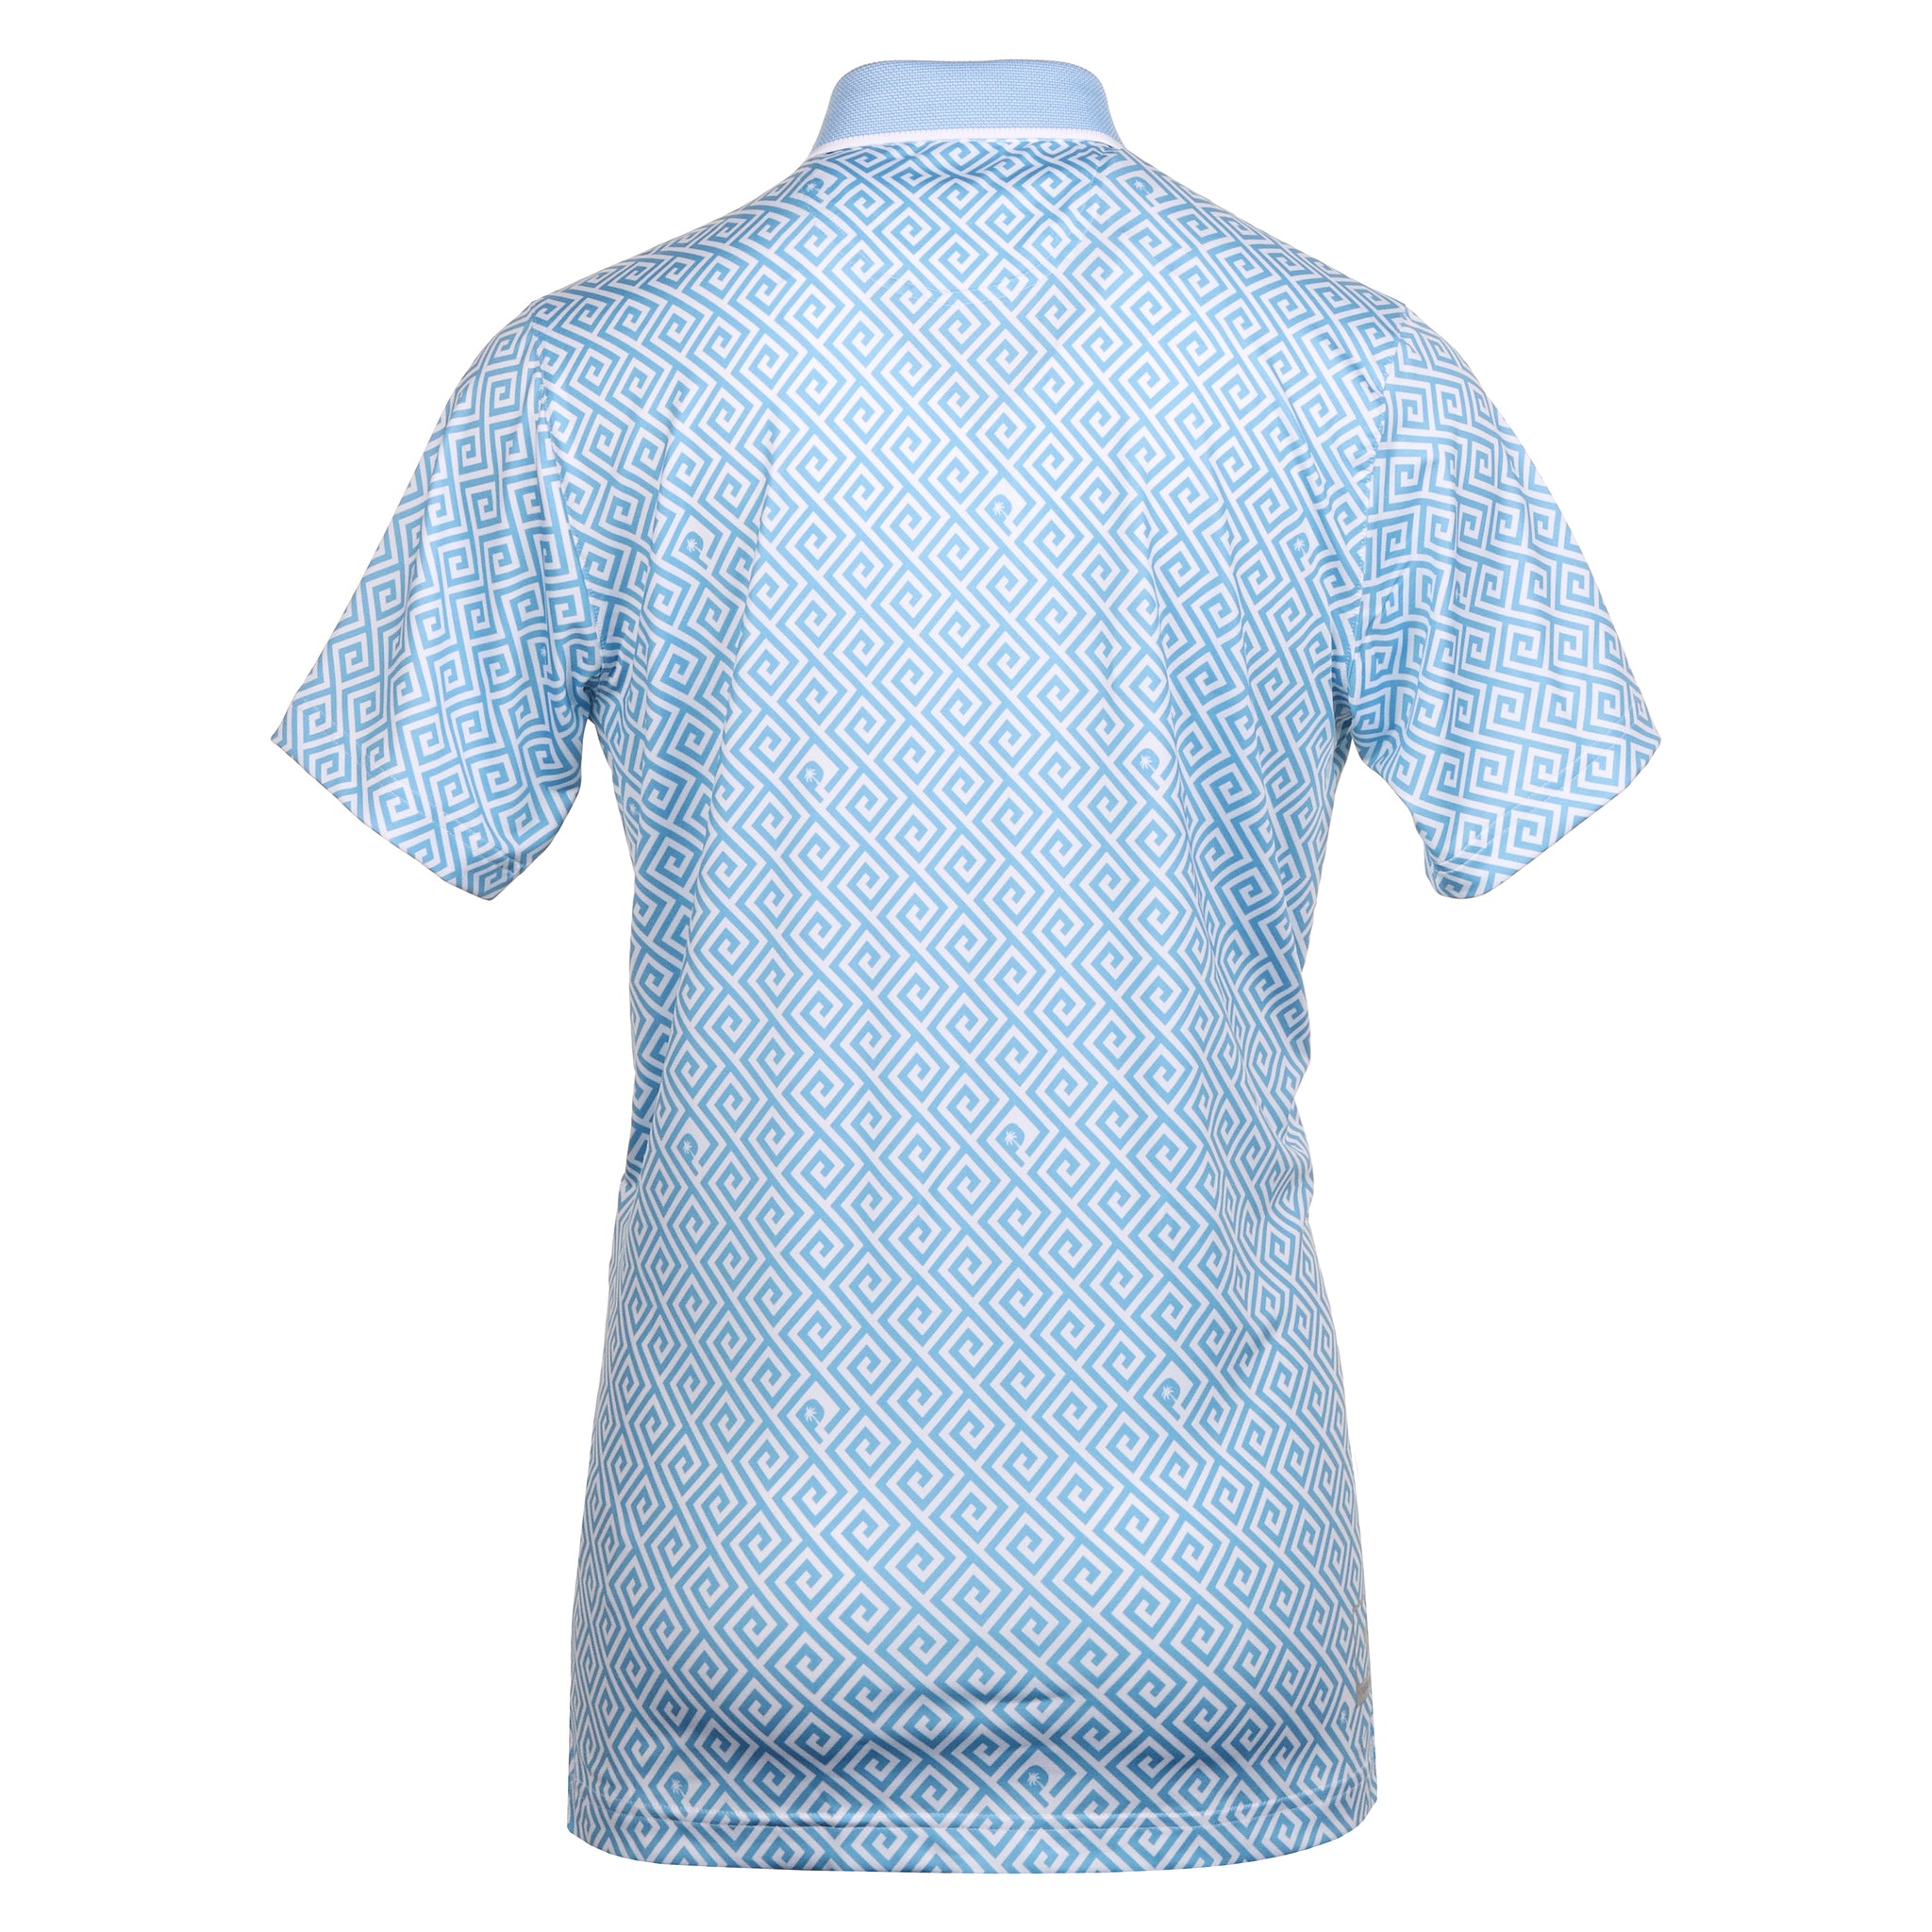 puma-golf-x-ptc-resort-shirt-623963-regal-blue-white-glow-02